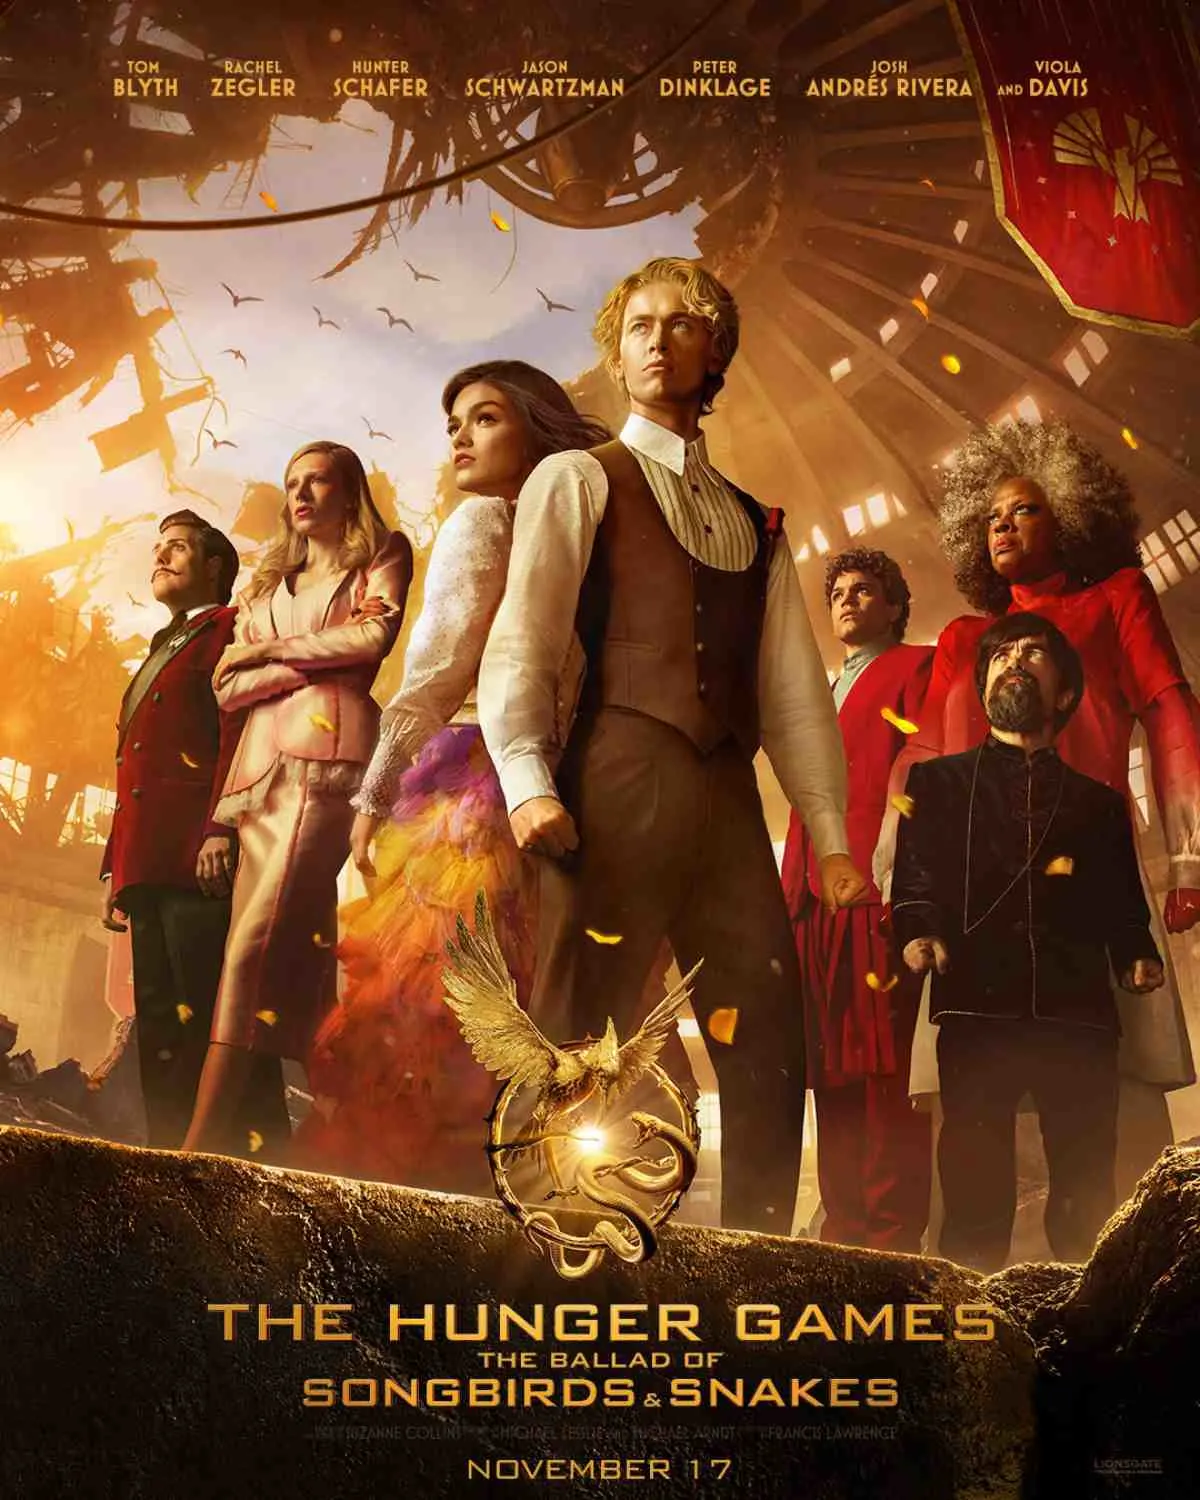 New Trailer for Hunger Games: The Ballad of Songbirds & Snakes